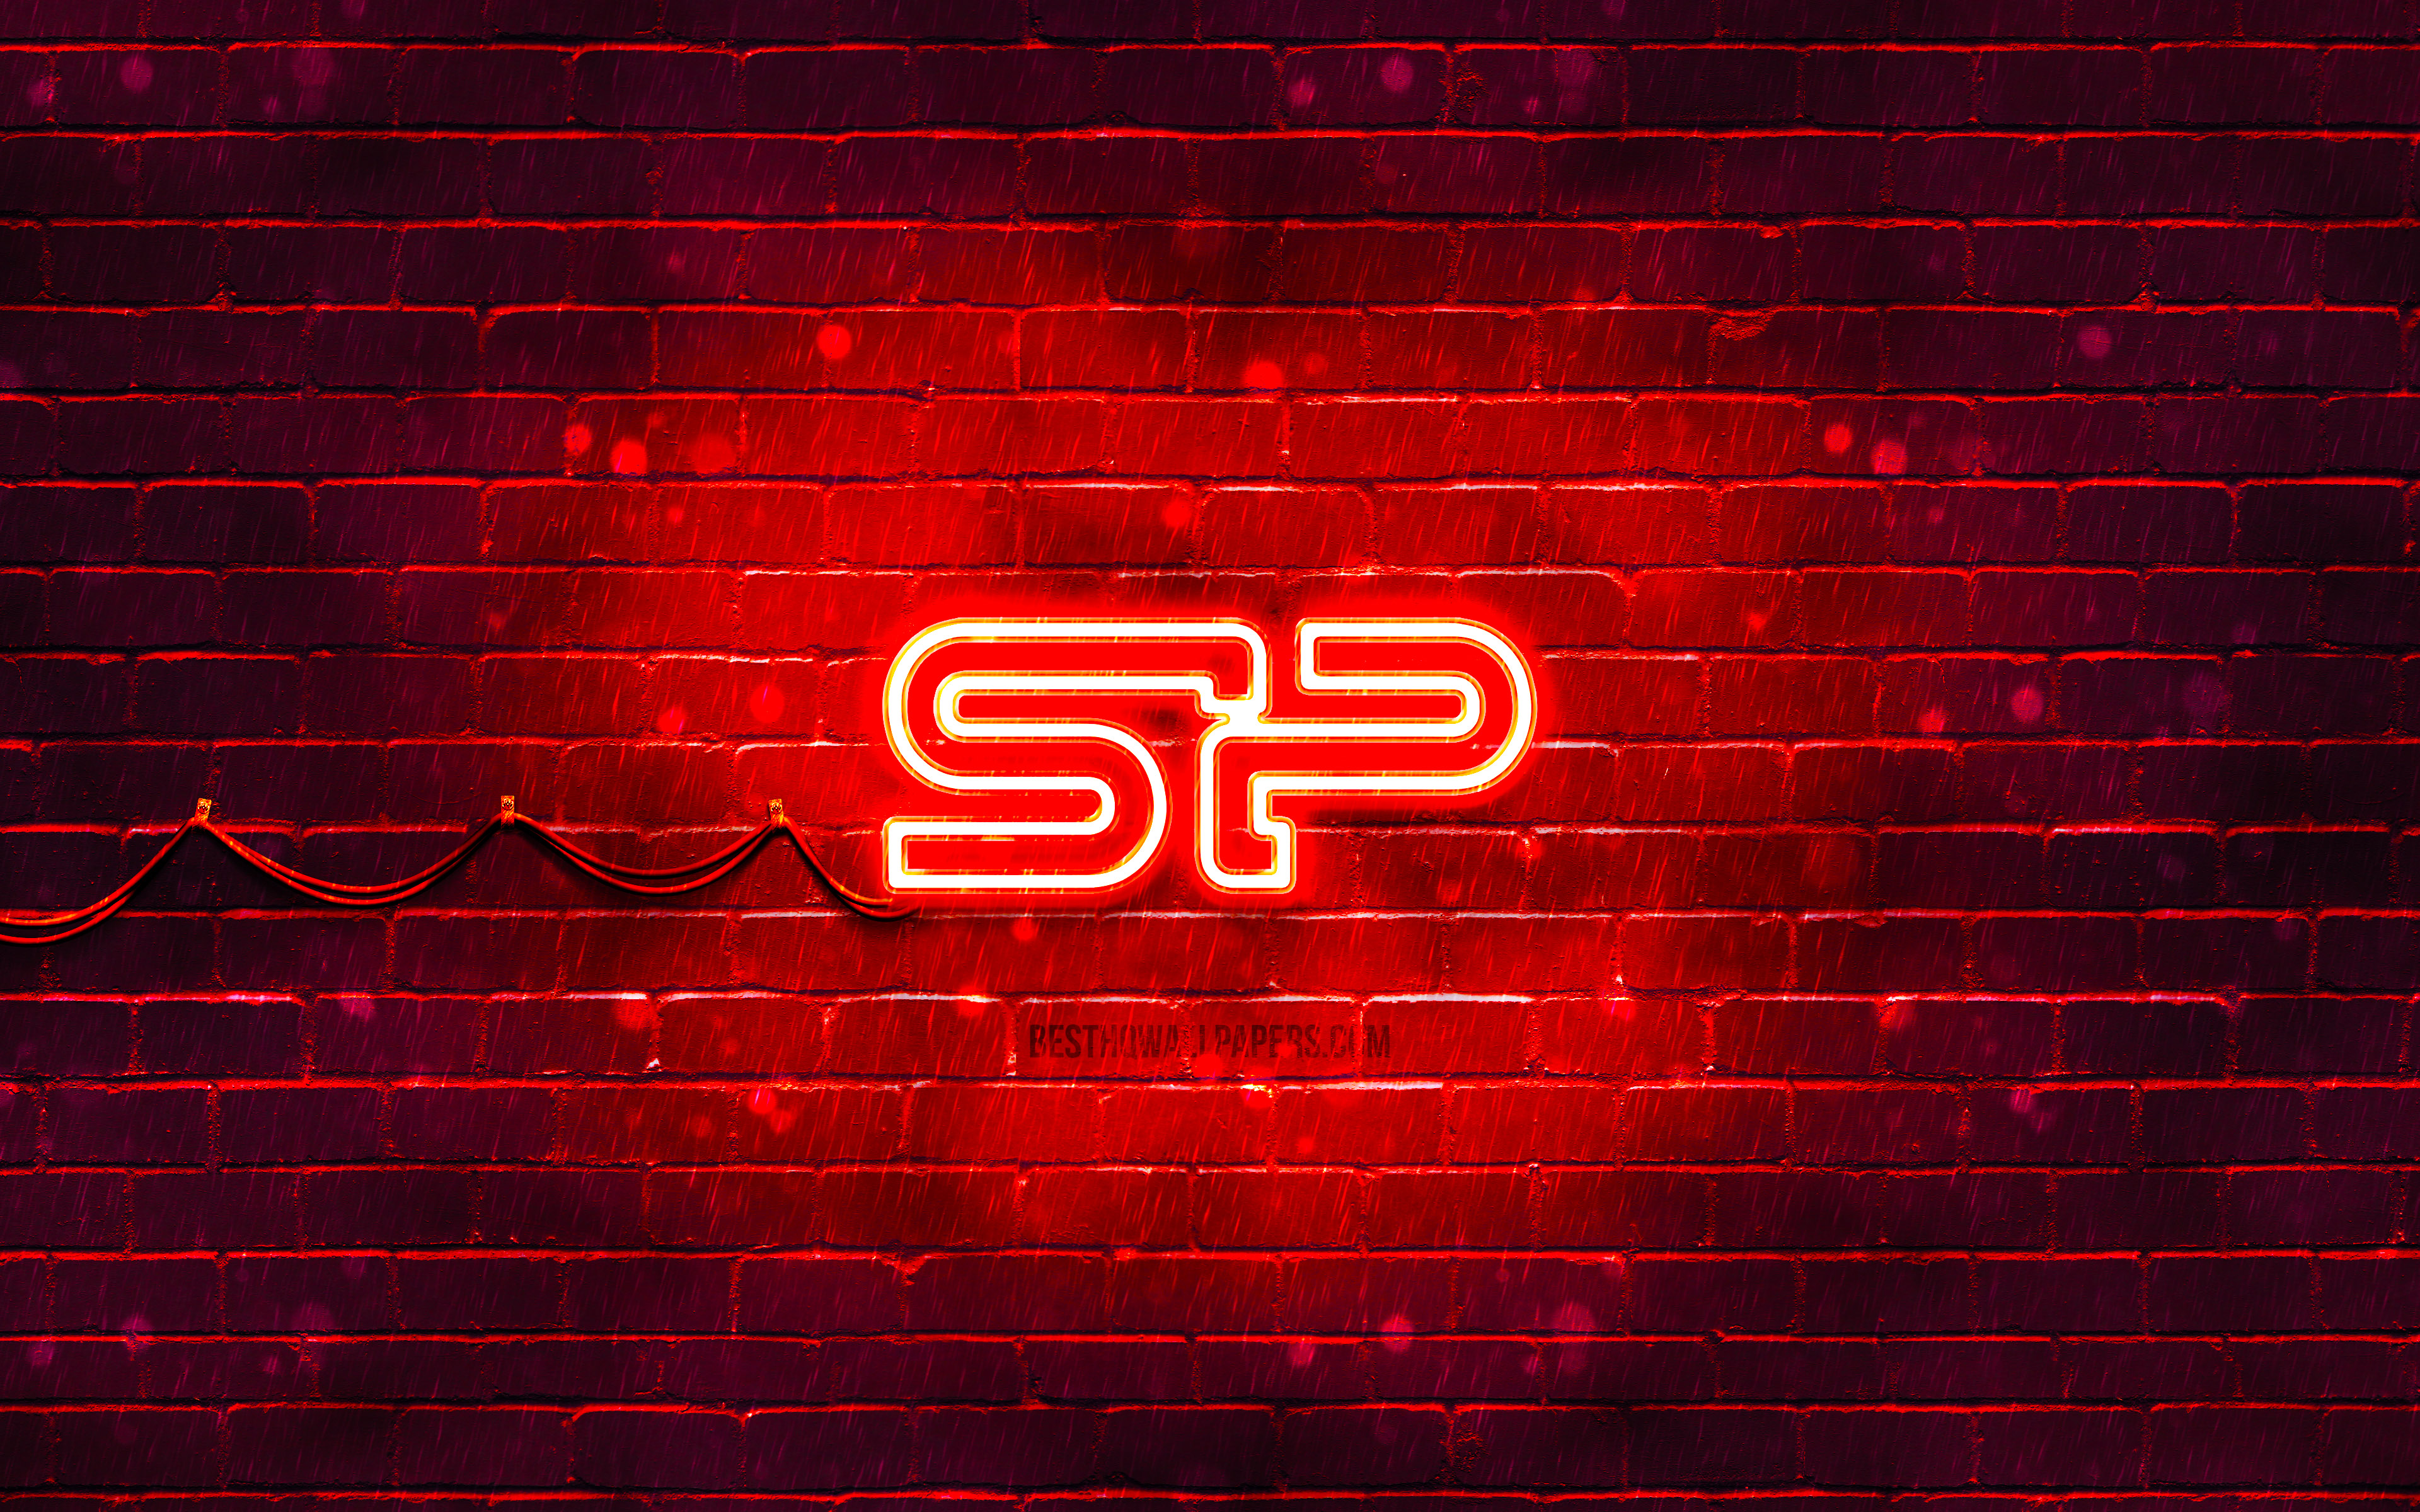 Повер ред. Silicon Power logo. Картинки для заставки на компьютер молодежные. Неоновый логотип MSI. Red Power.